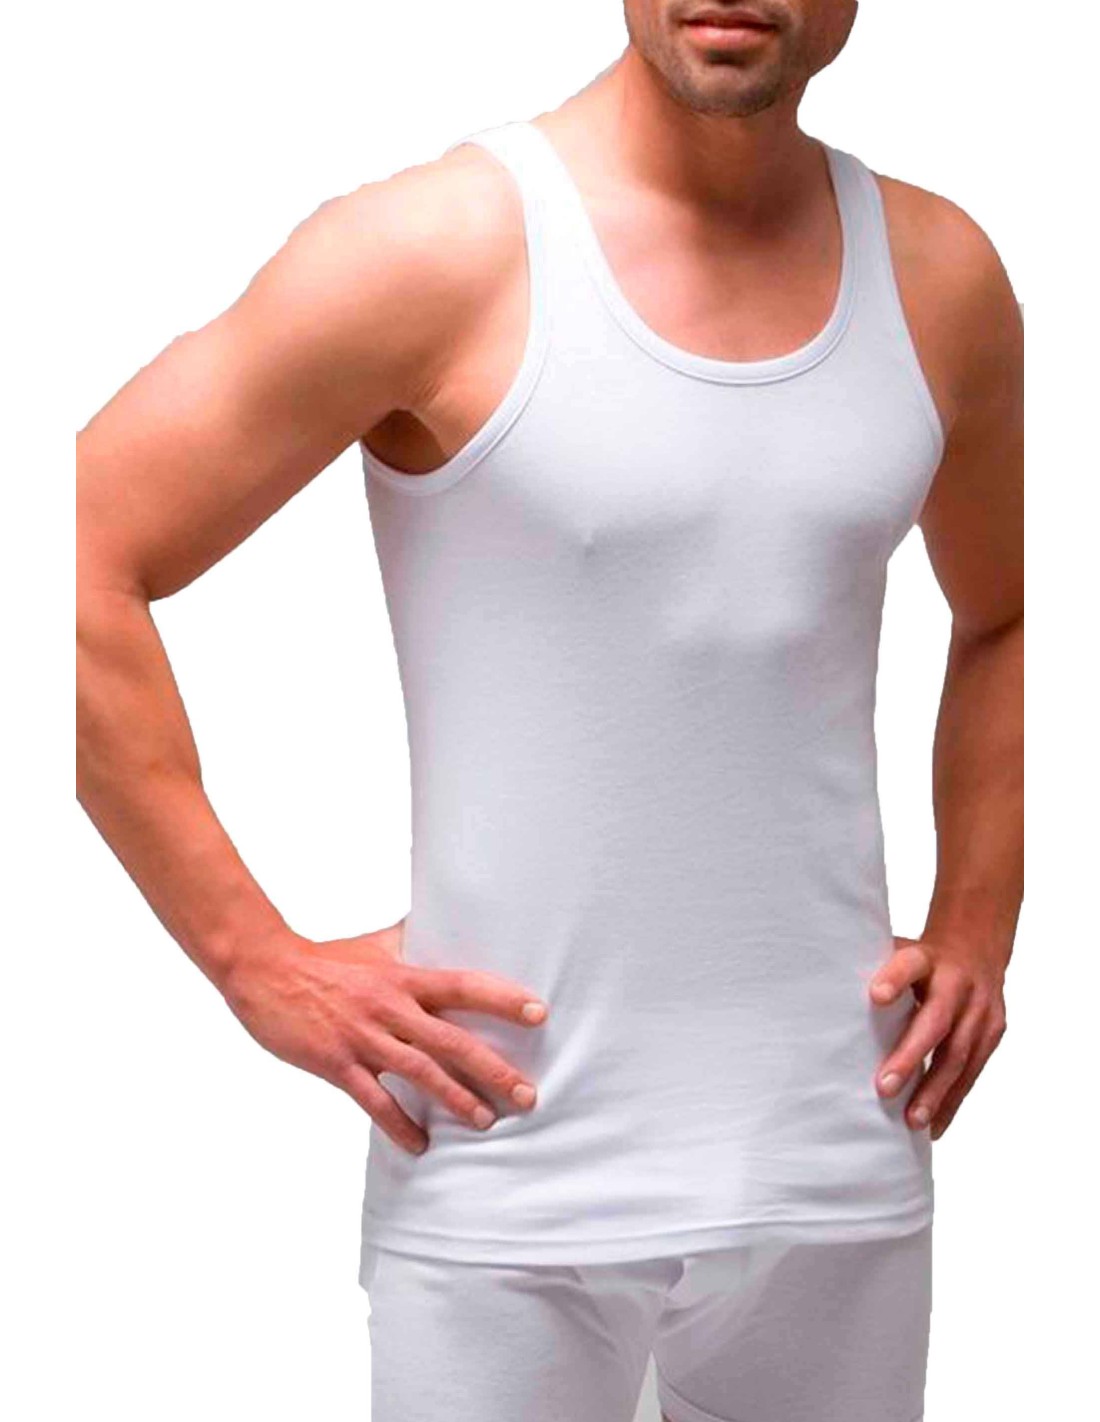 Camiseta de Algodón para Hombre - Azul Celeste jaspeado – Gartner Swimwear